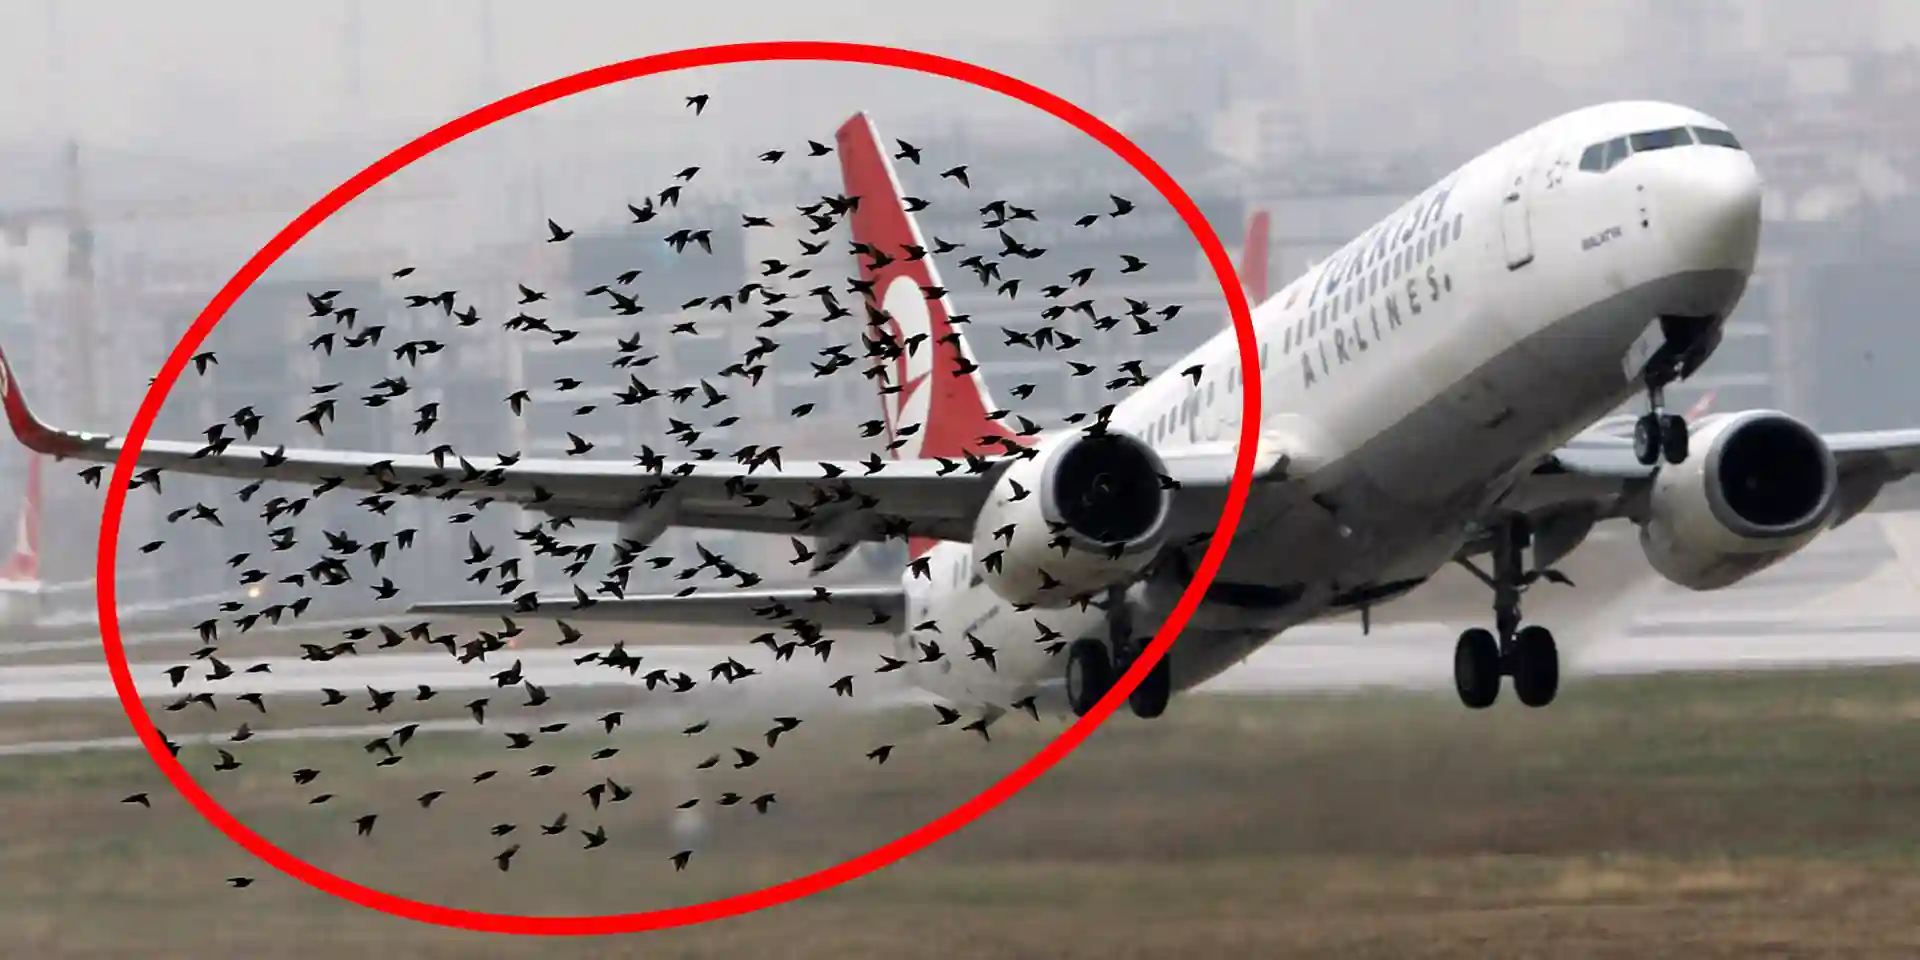 Air Zim Passengers Shaken After Birds Hit Engine - New Details Emerge